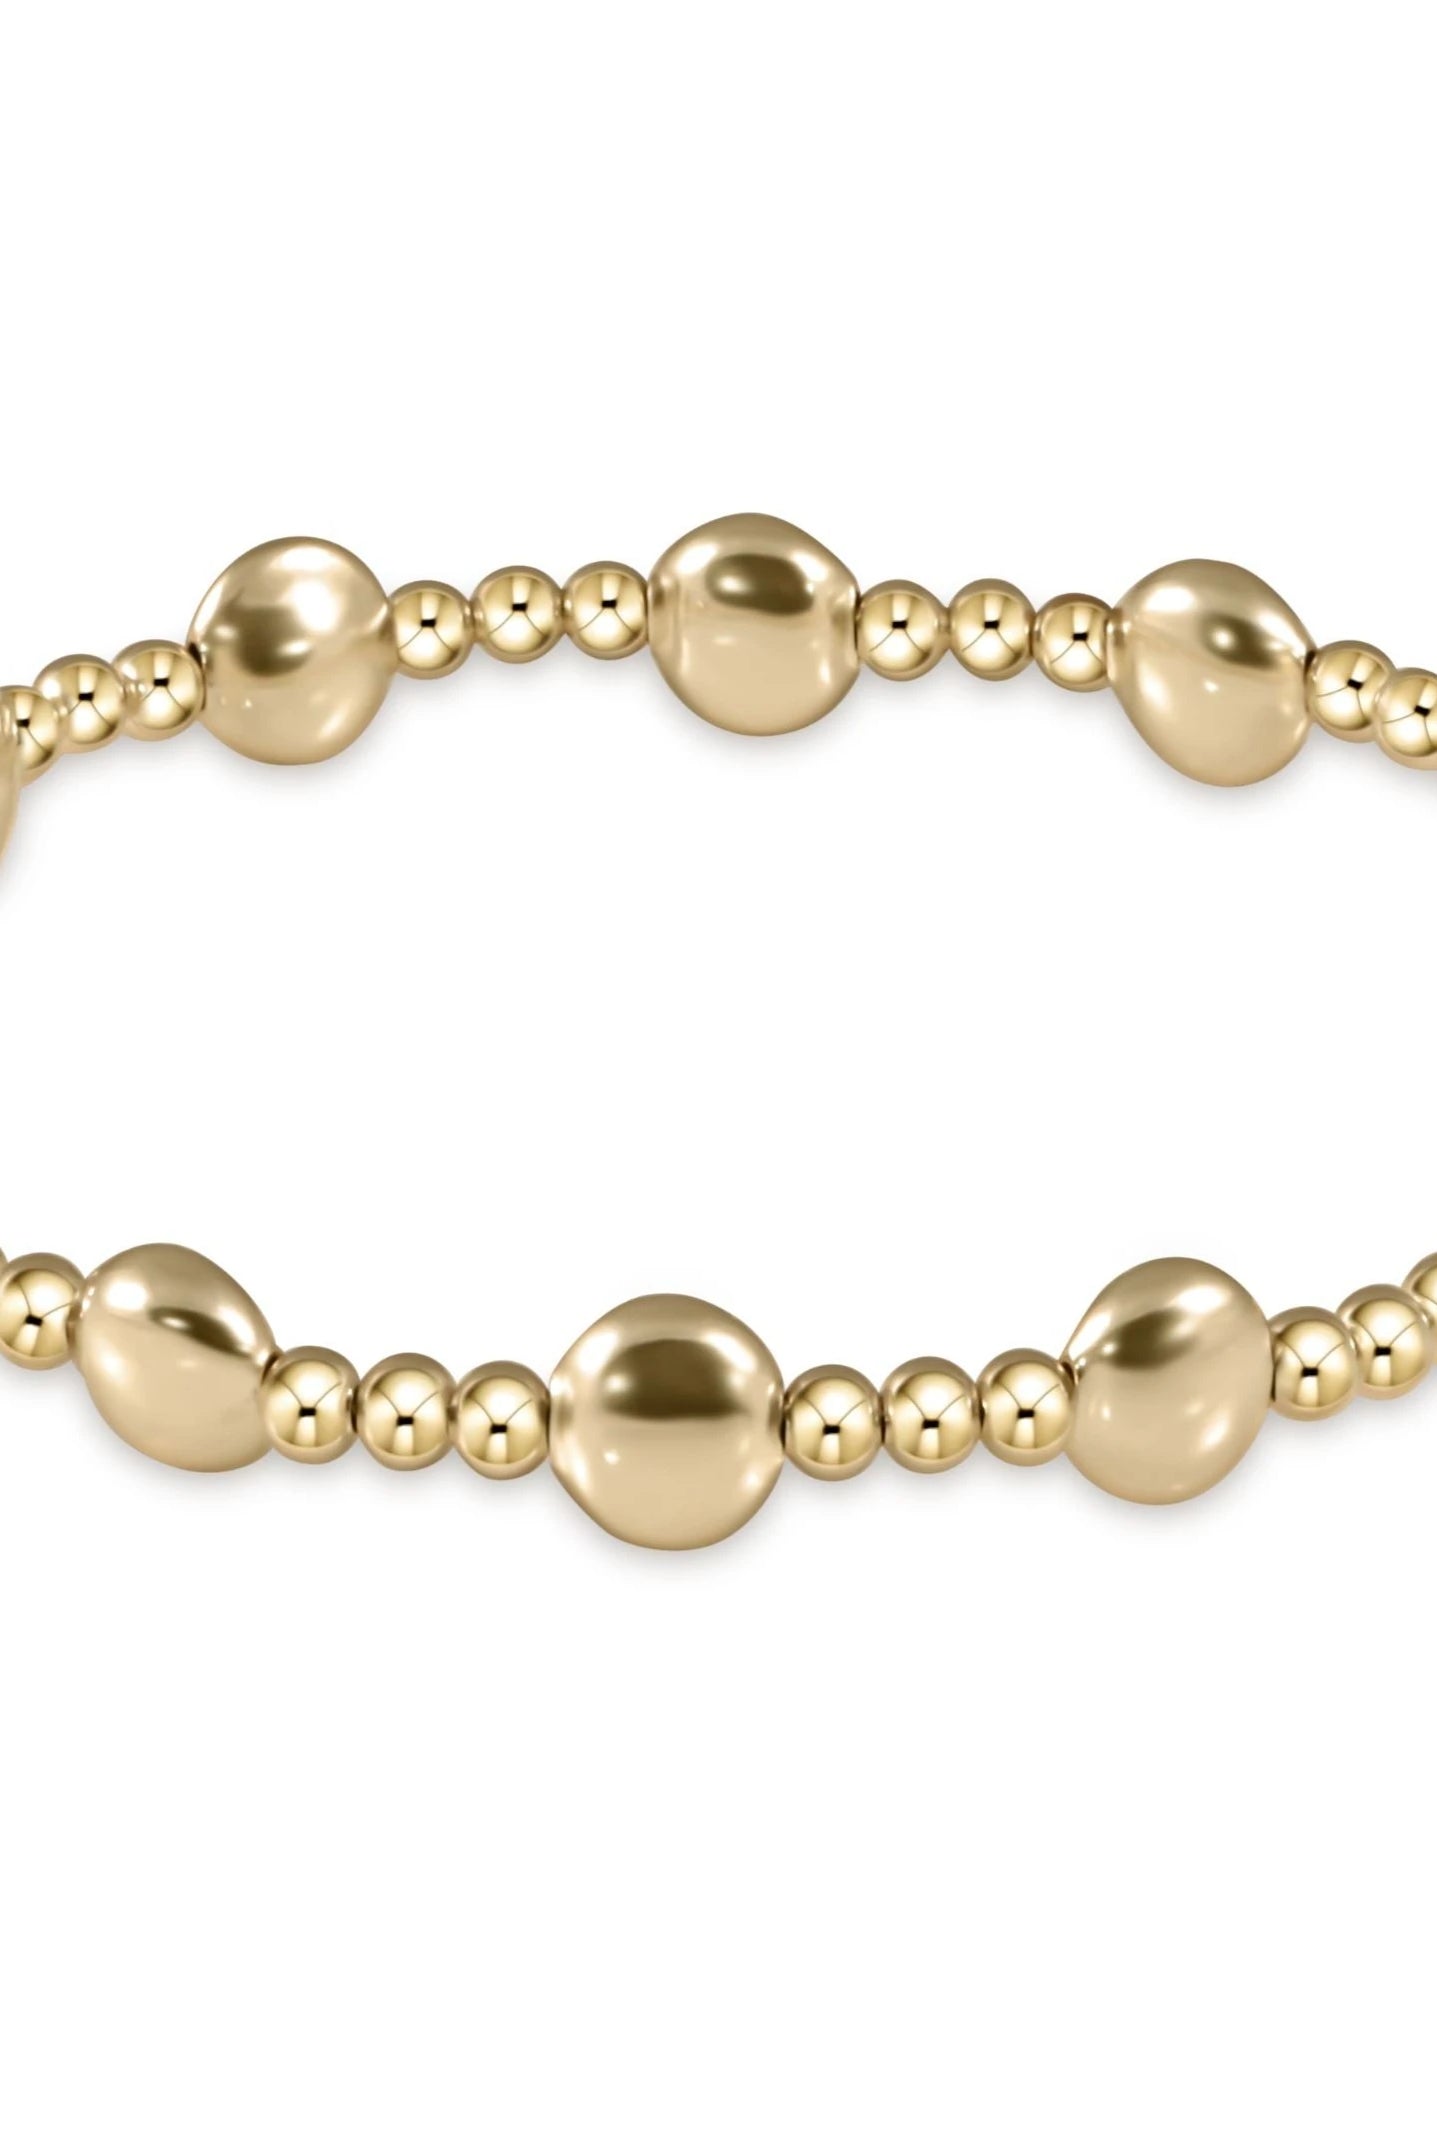 Honesty Gold Sincerity Pattern Bracelet-Bracelets-eNewton-The Lovely Closet, Women's Fashion Boutique in Alexandria, KY